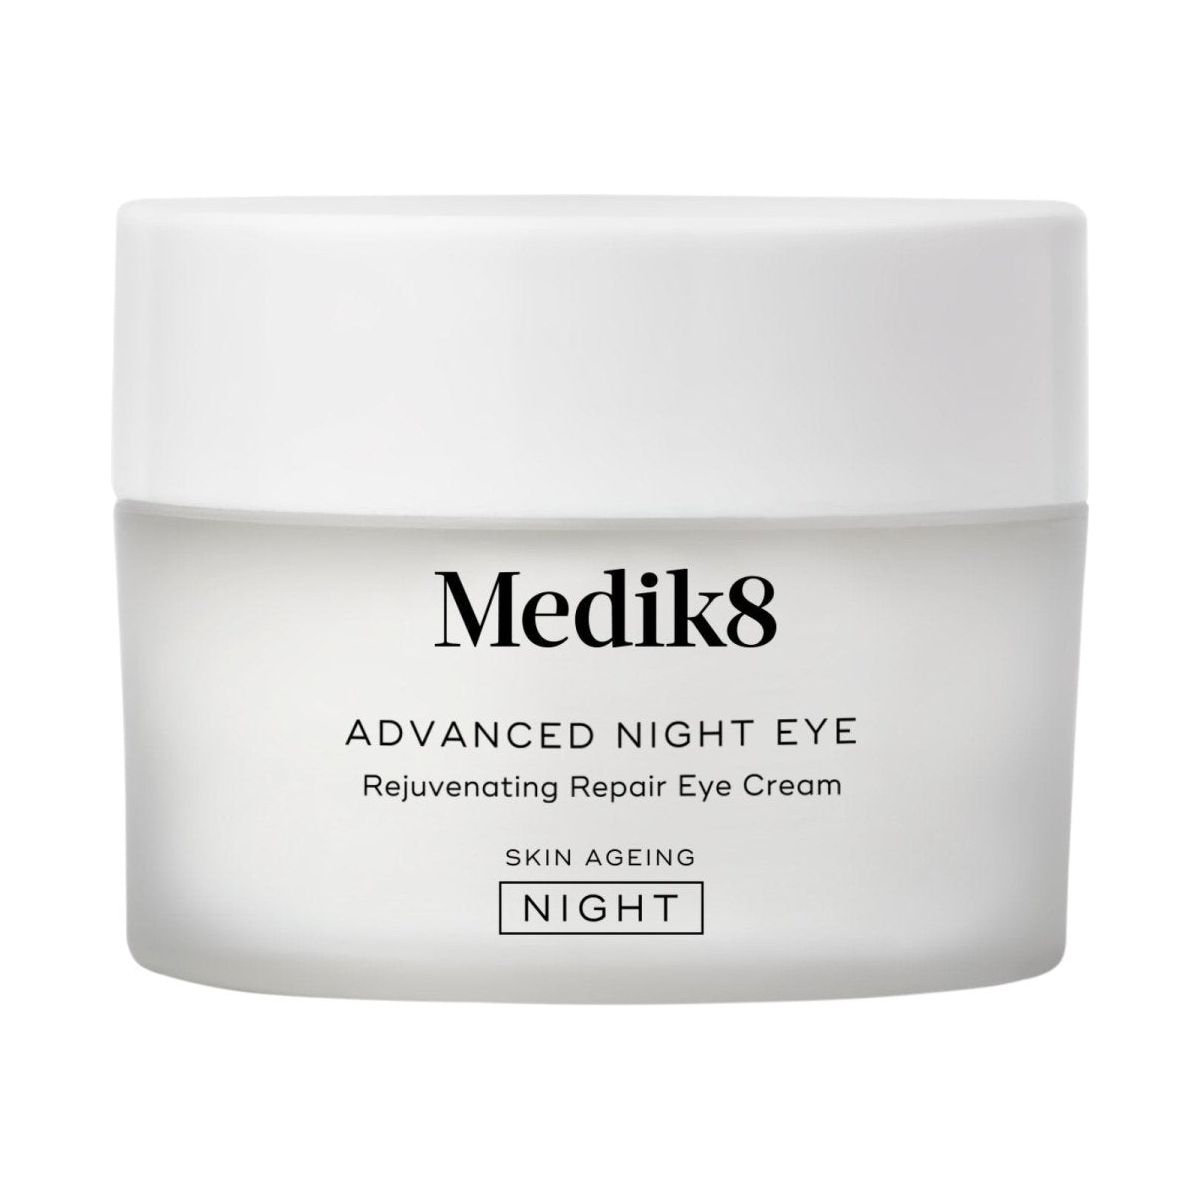 Medik8 | Advanced Night Eye | 15ml - DG International Ventures Limited